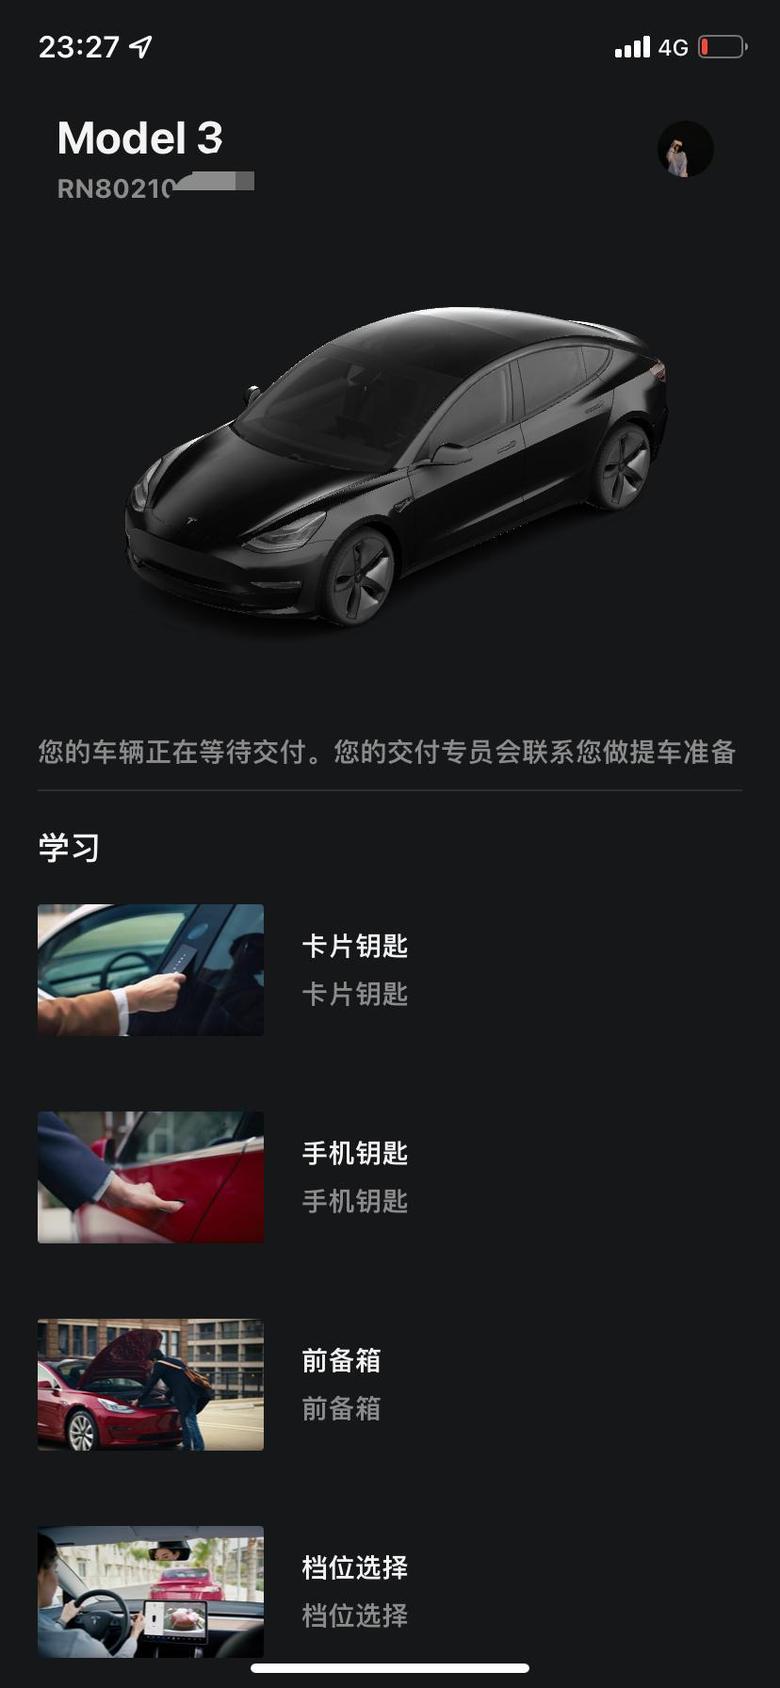 model 3 有无南京常州地区的车友群，拉一下！